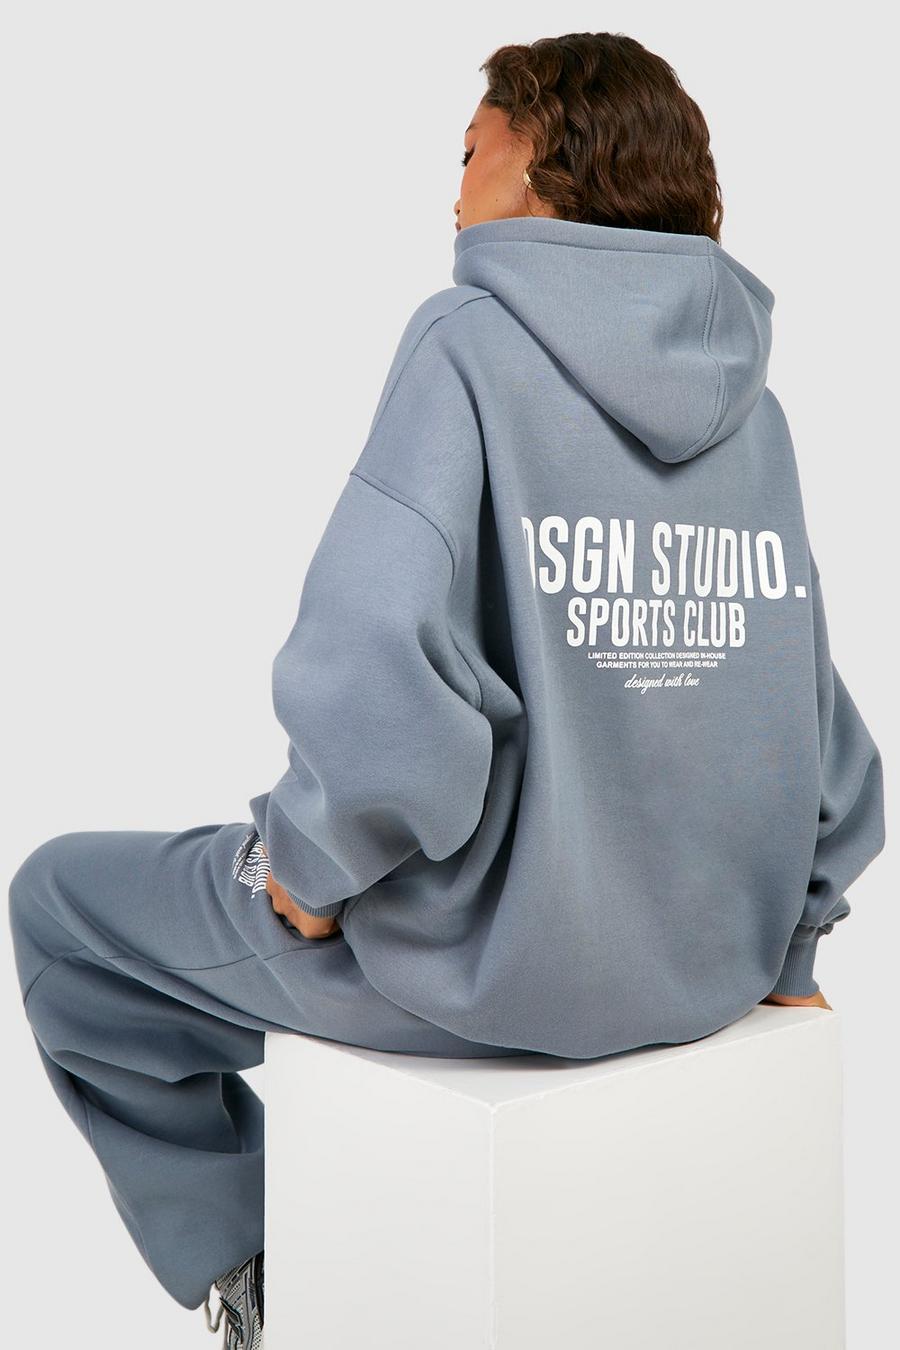 Sage vert Dsgn Studio Sports Club Oversized Hoodie  image number 1